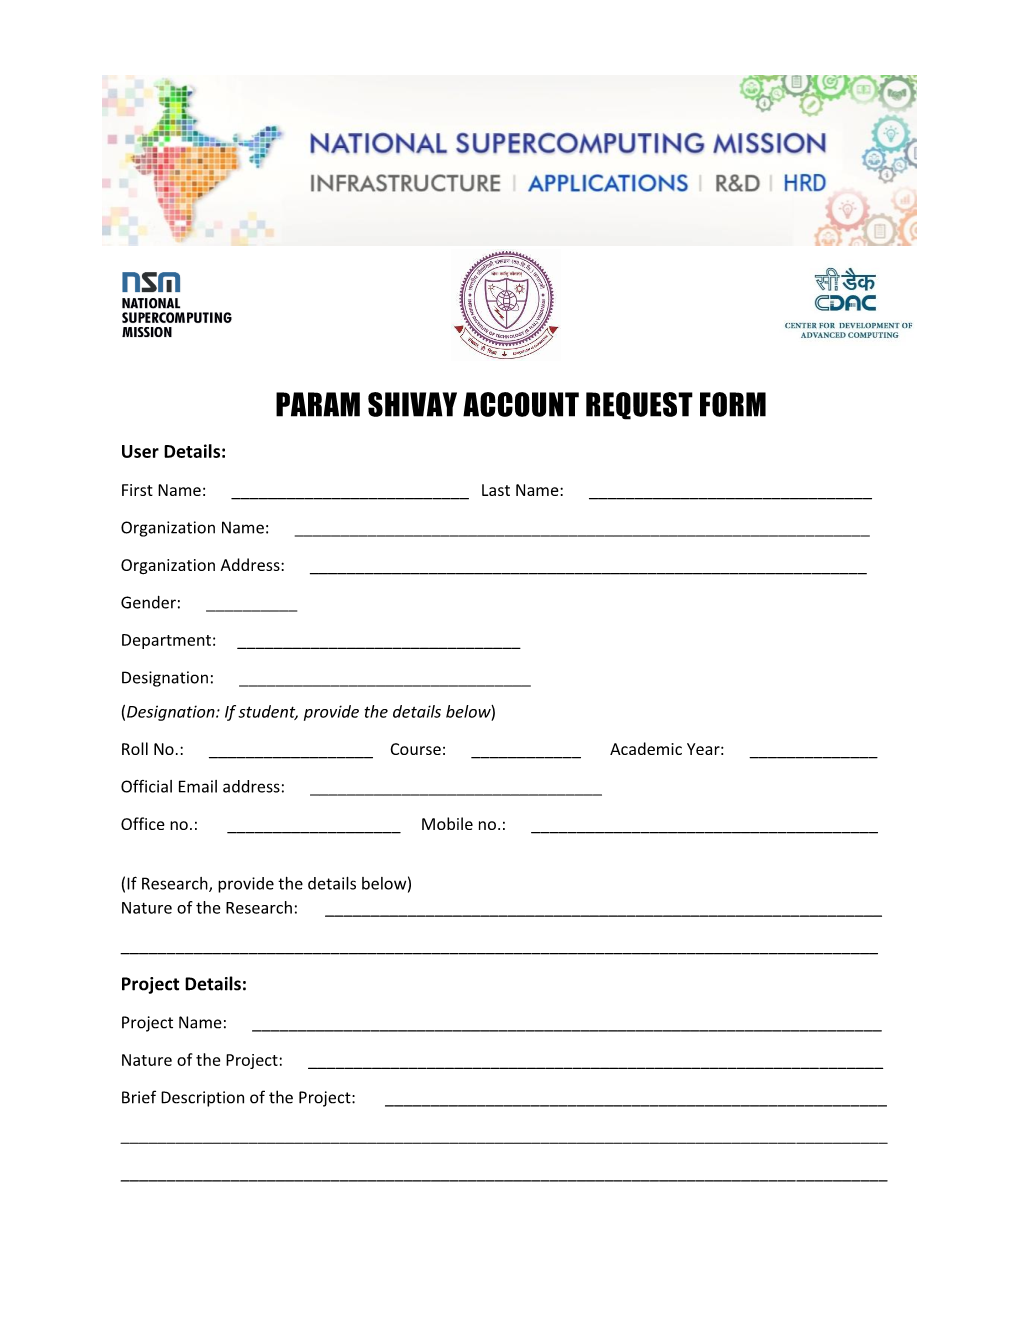 Param Shivay Account Request Form